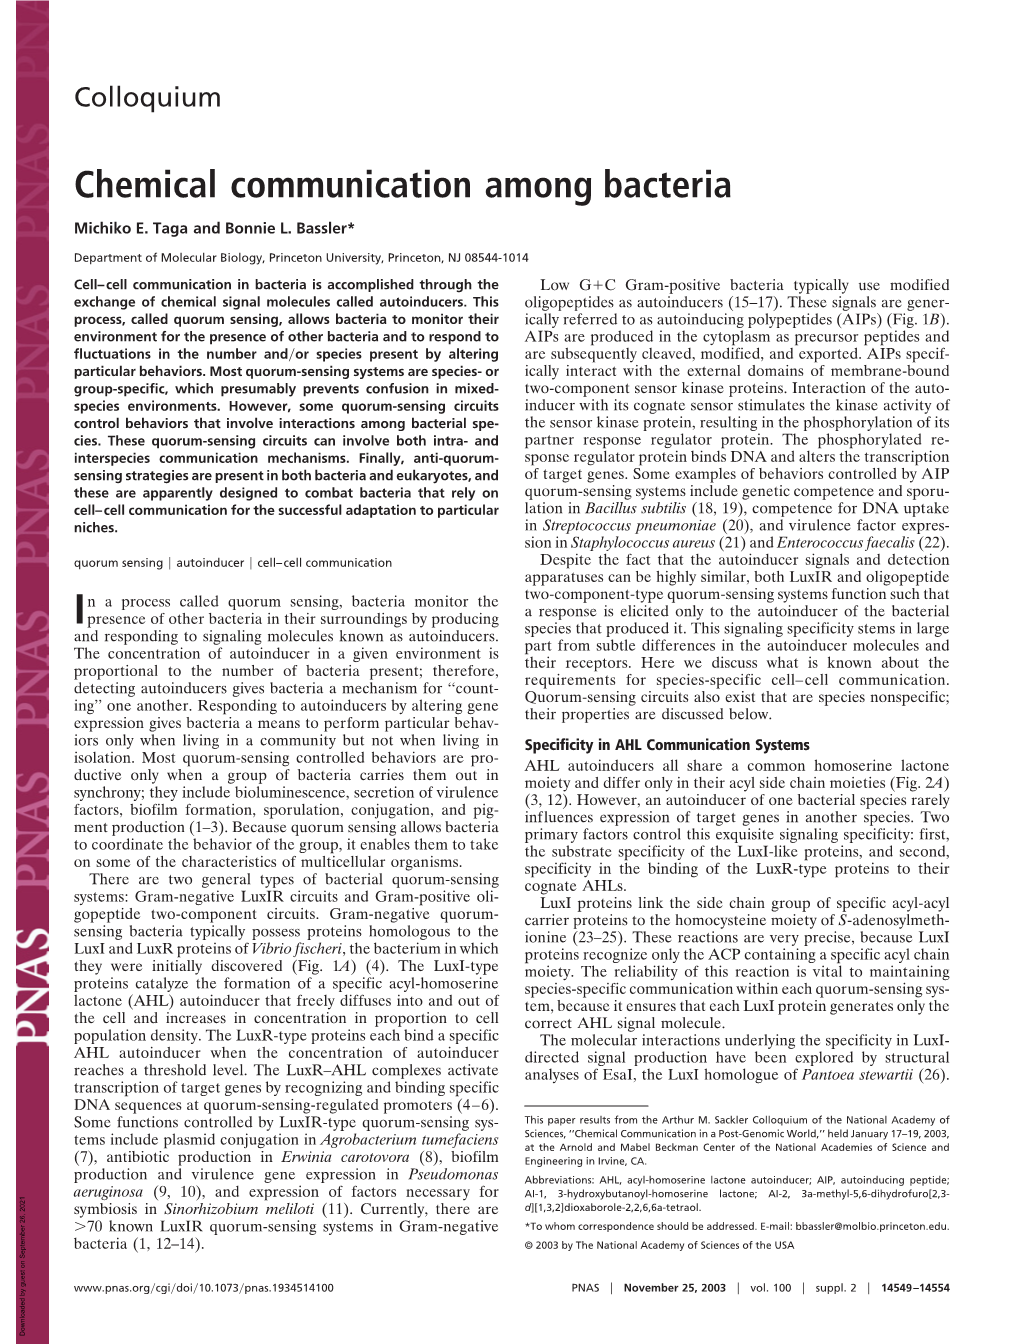 Chemical Communication Among Bacteria